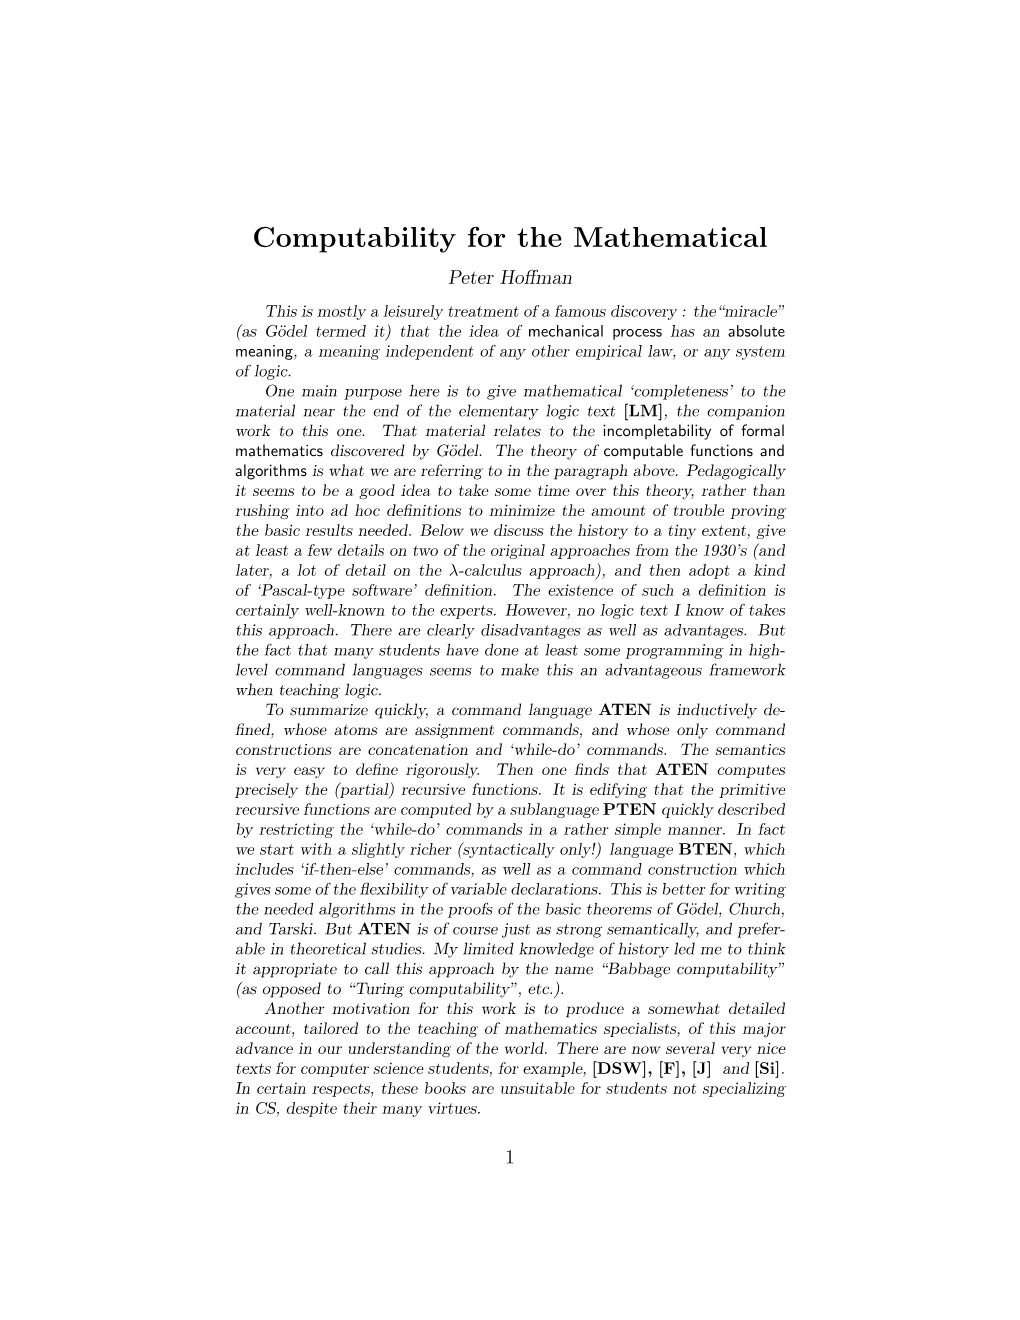 Computability for the Mathematical (PDF)